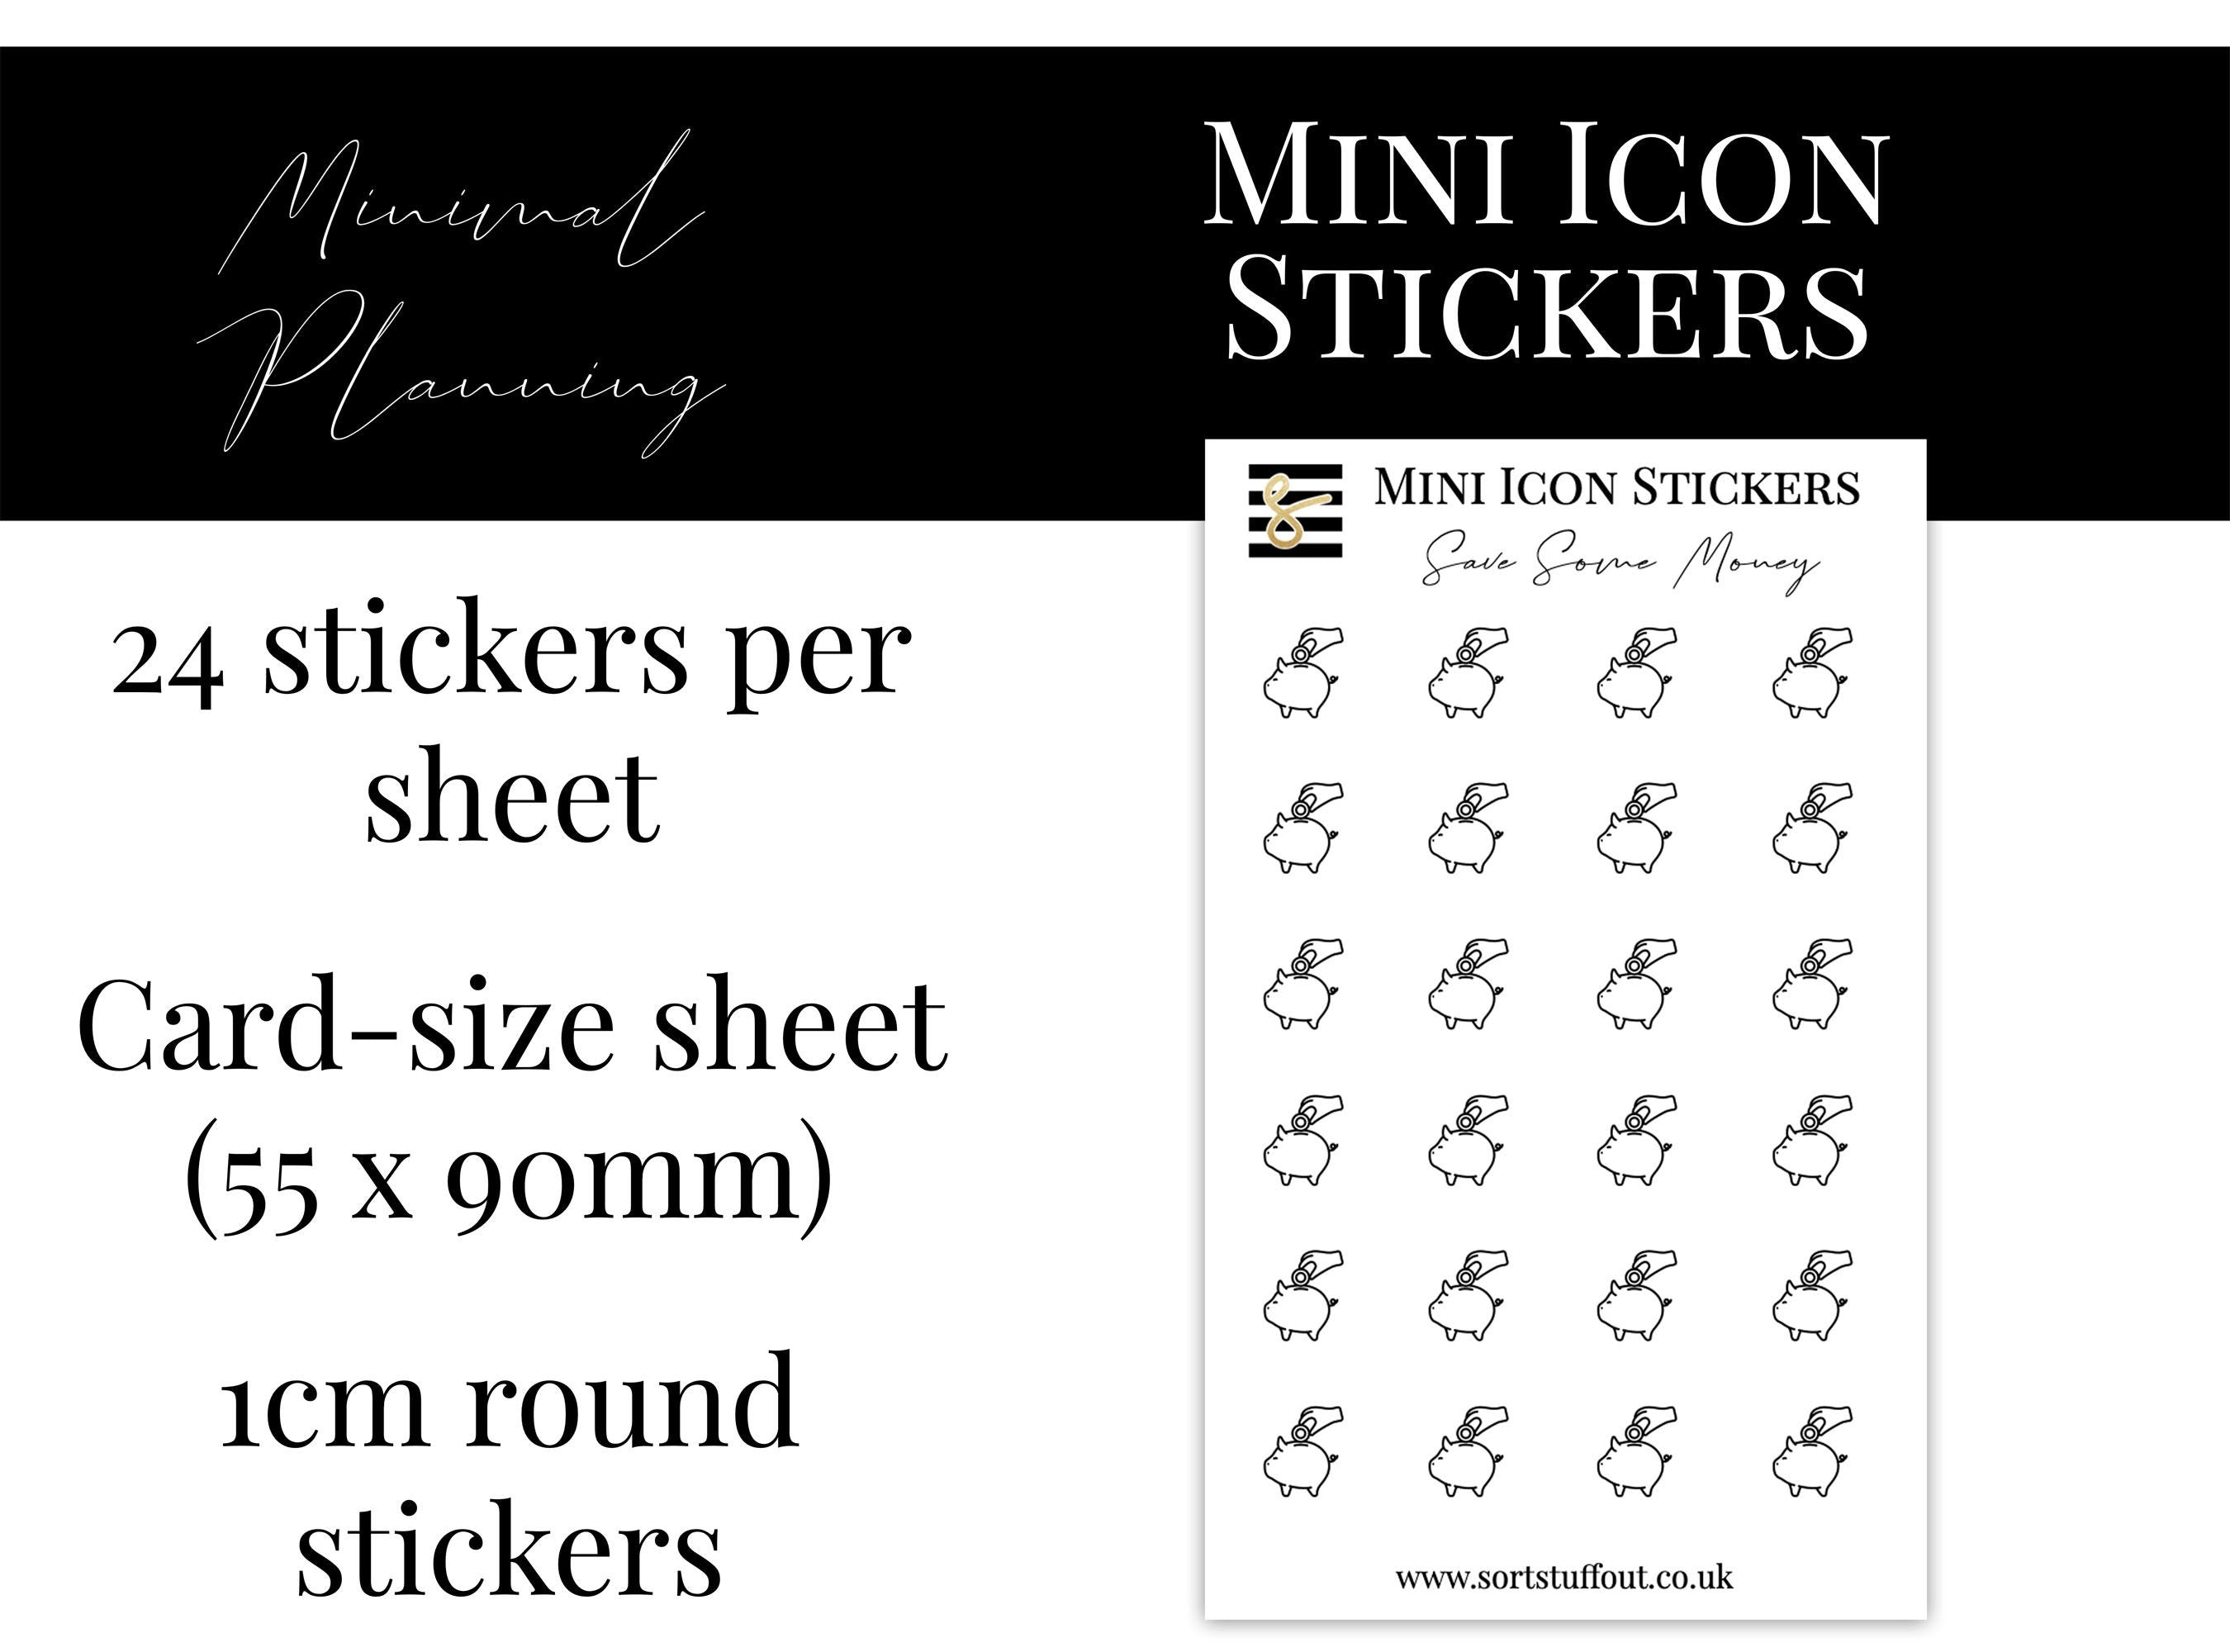 Mini Icon Stickers - Save Some Money